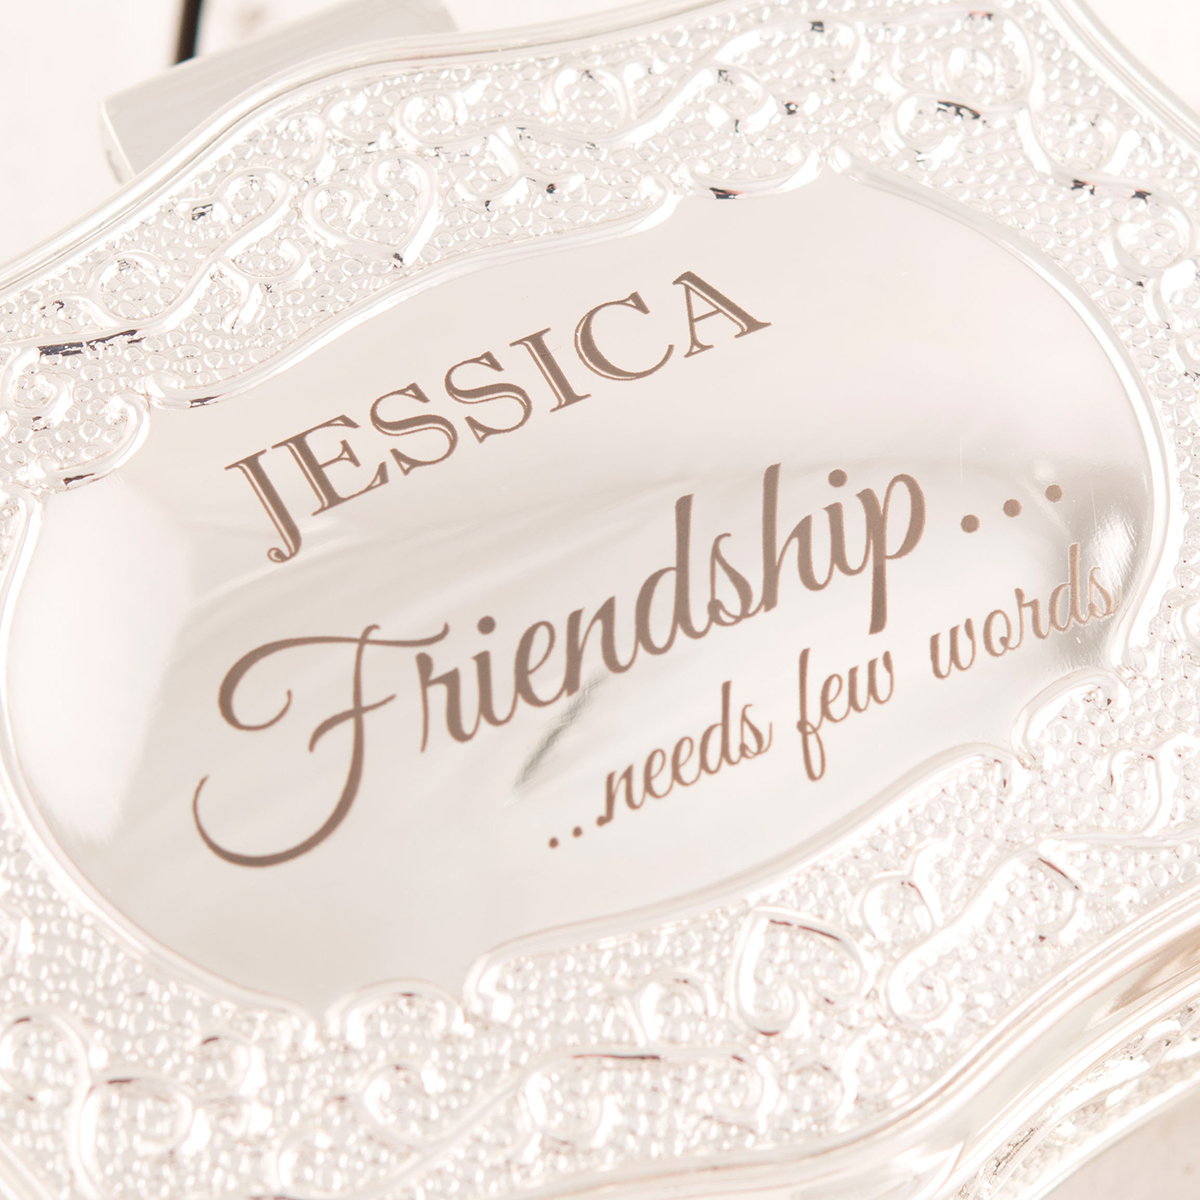 Engraved Antique-Style Trinket Box - Friendship Needs Few Words